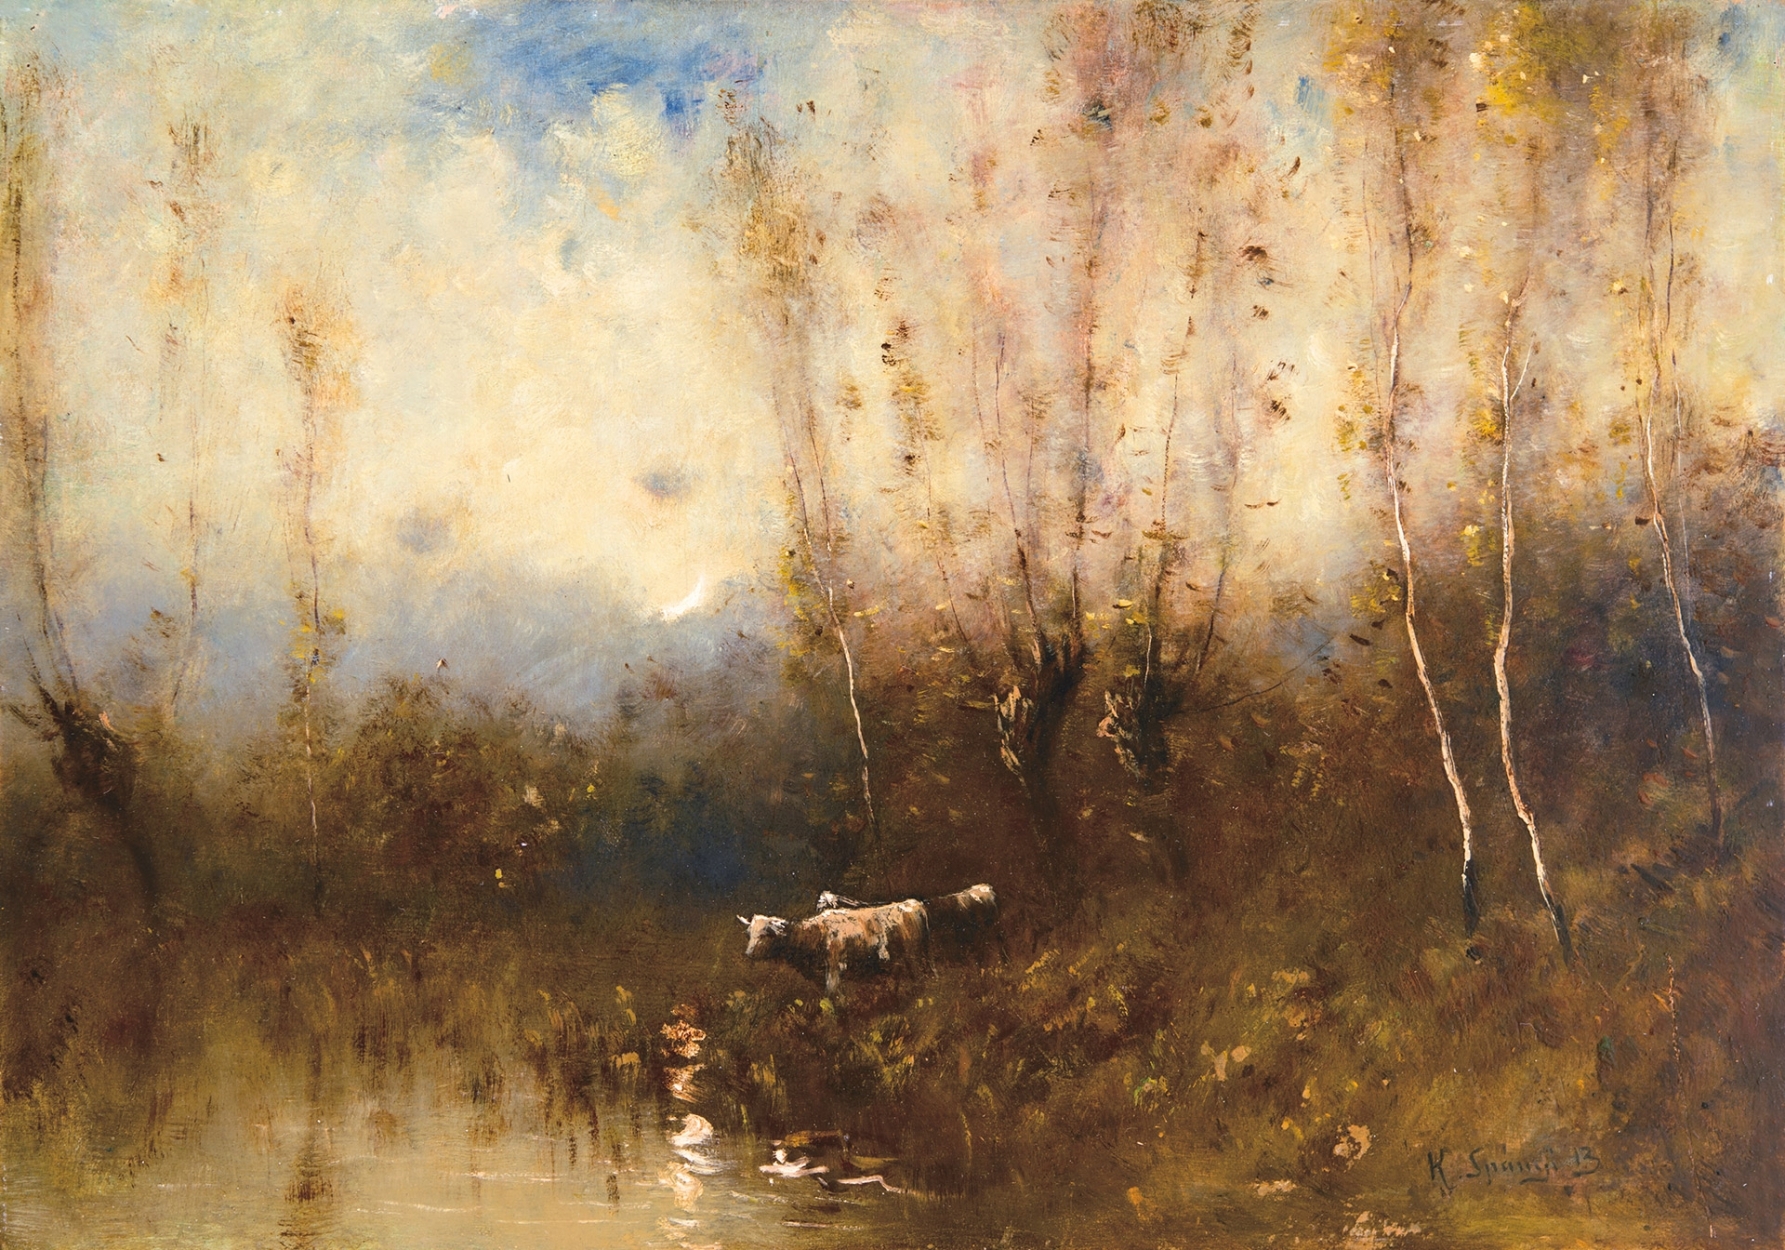 K. Spányi Béla (1852-1914) Autumn Landscape